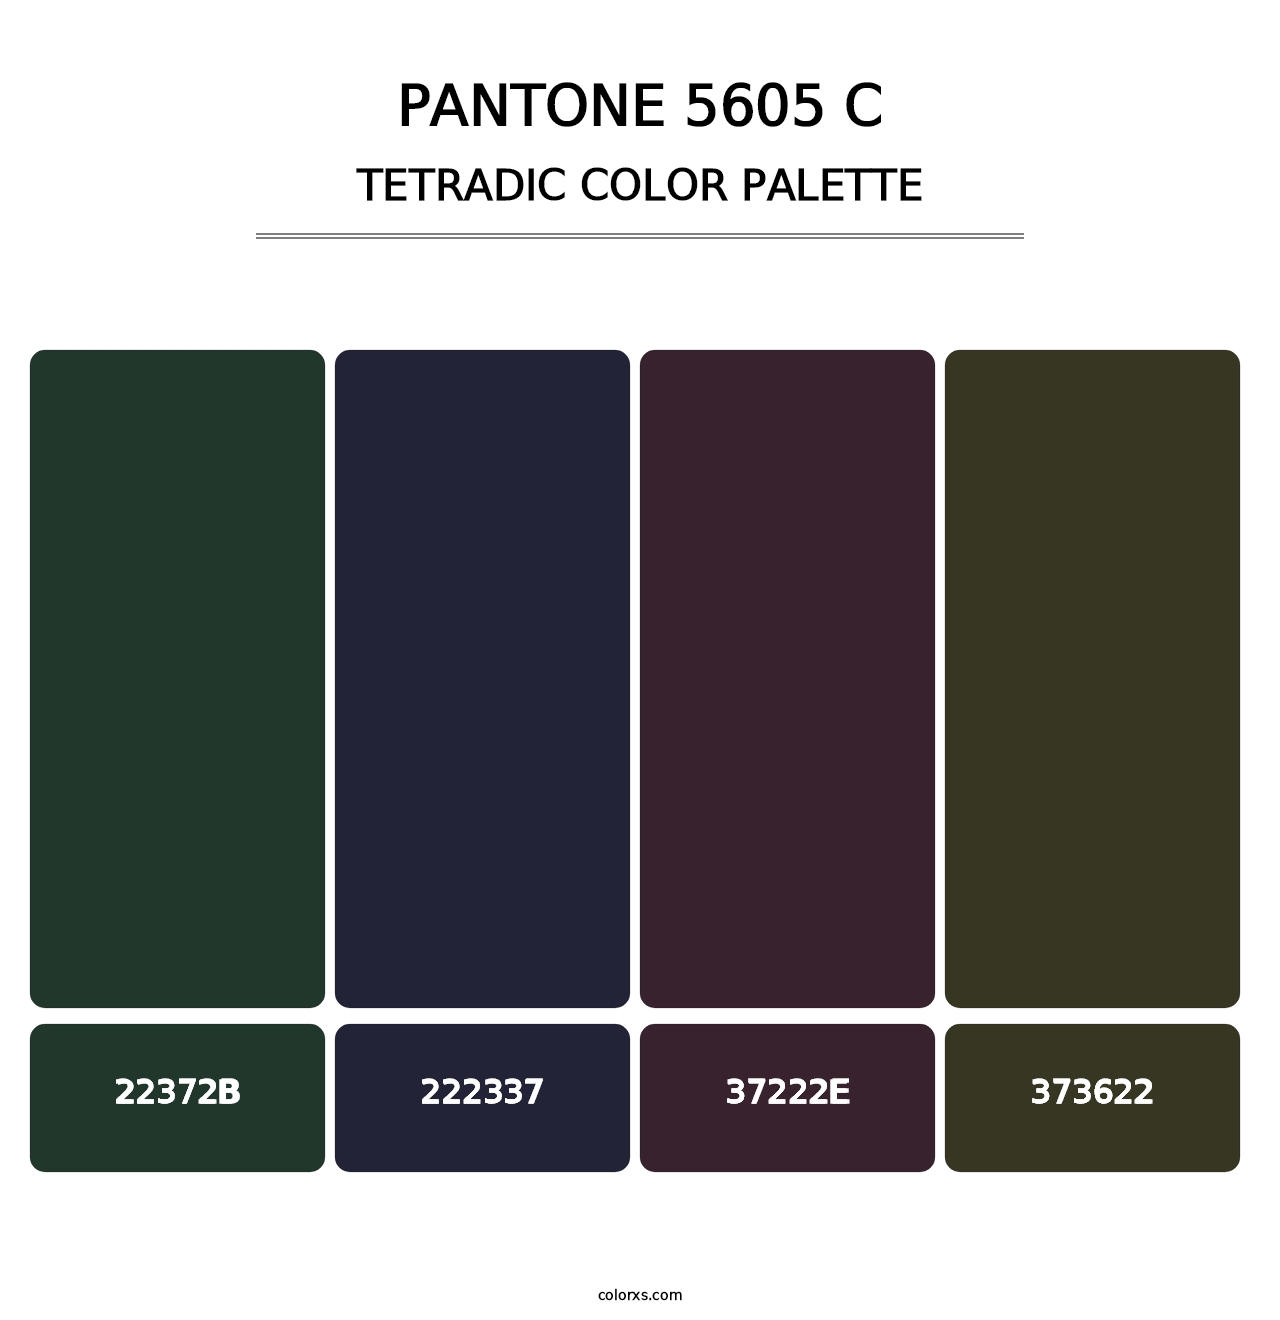 PANTONE 5605 C - Tetradic Color Palette